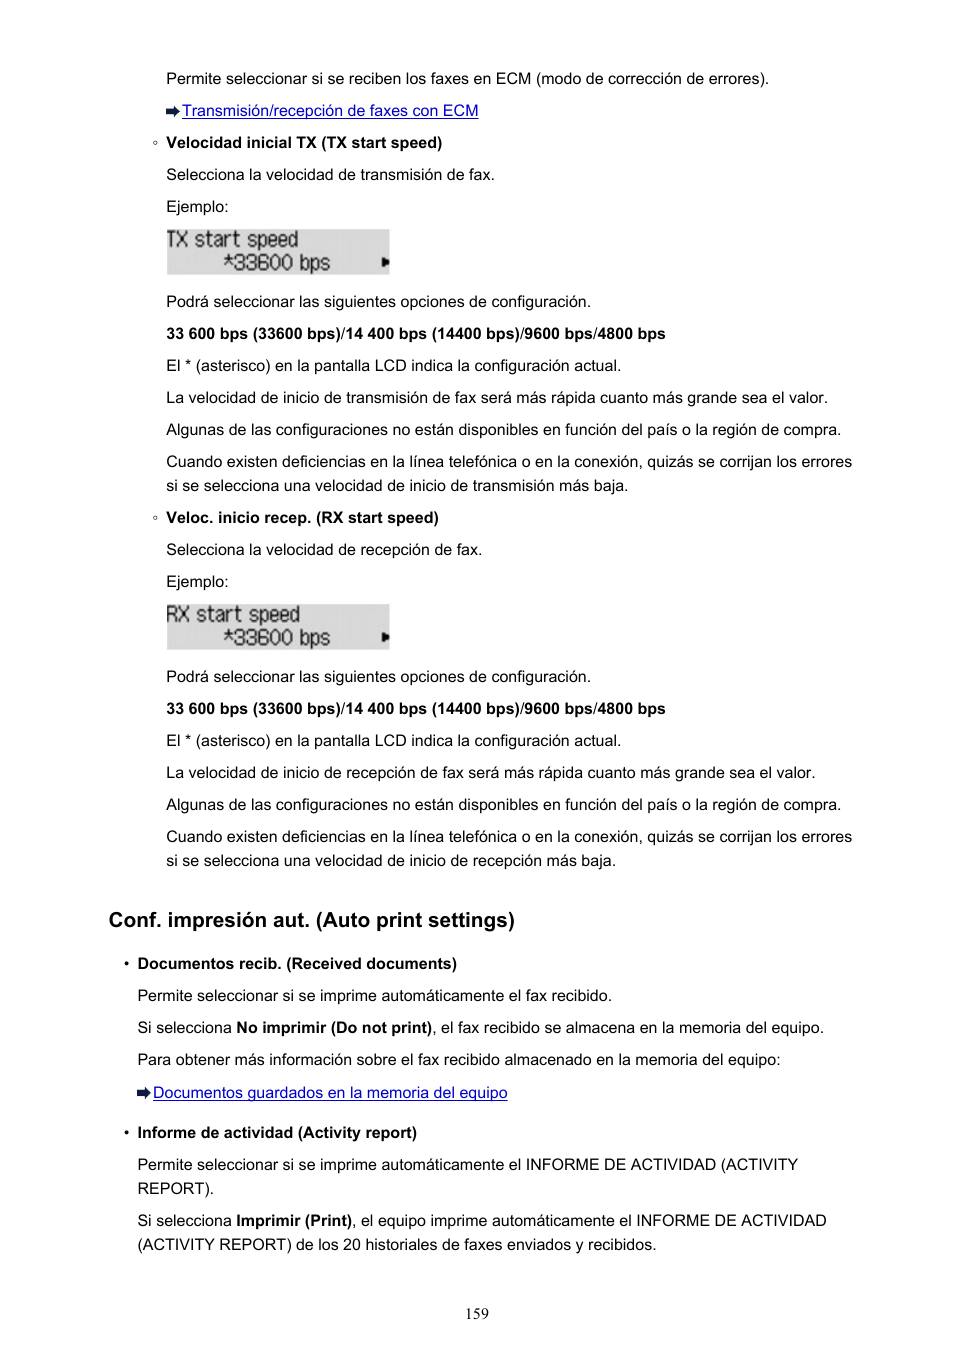 Conf. impresión aut. (auto print settings) | Canon PIXMA MX475 Manual del usuario | Página 159 / 725